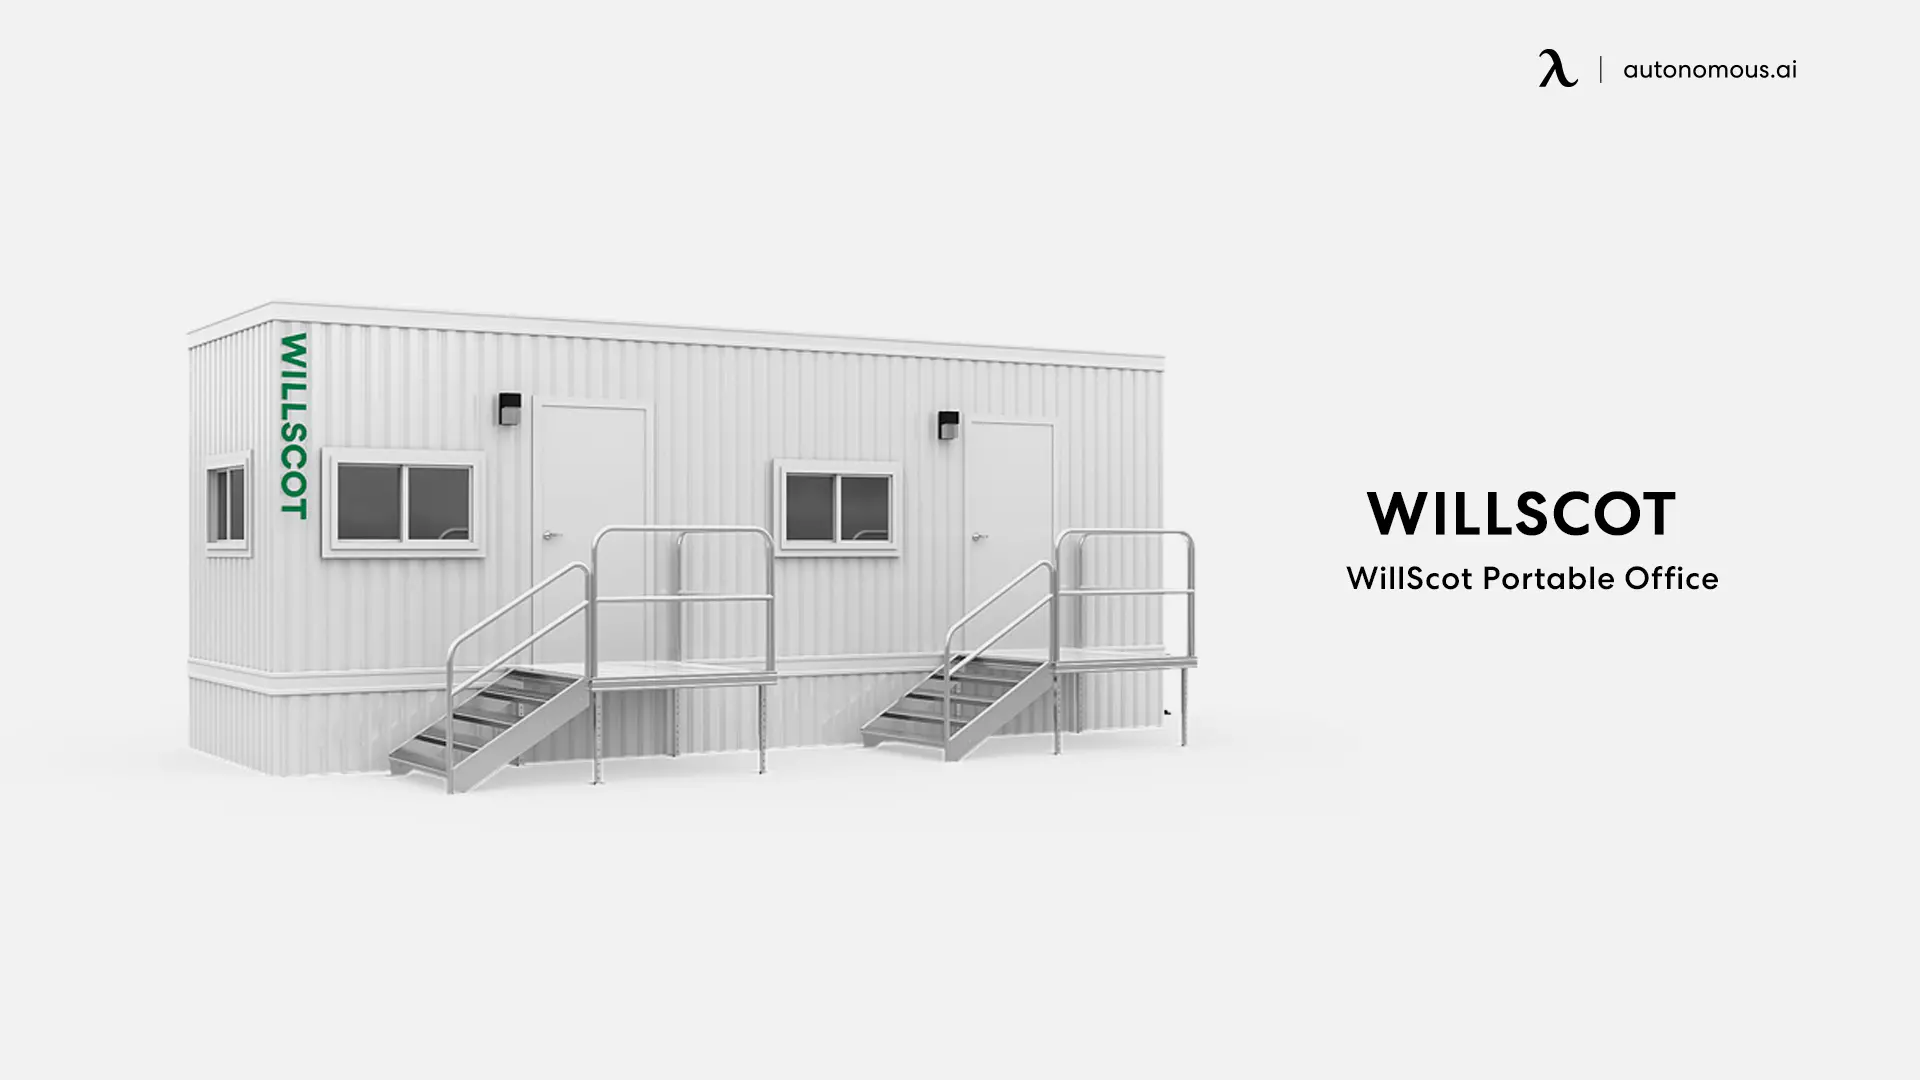 WillScot Portable Office - modular office